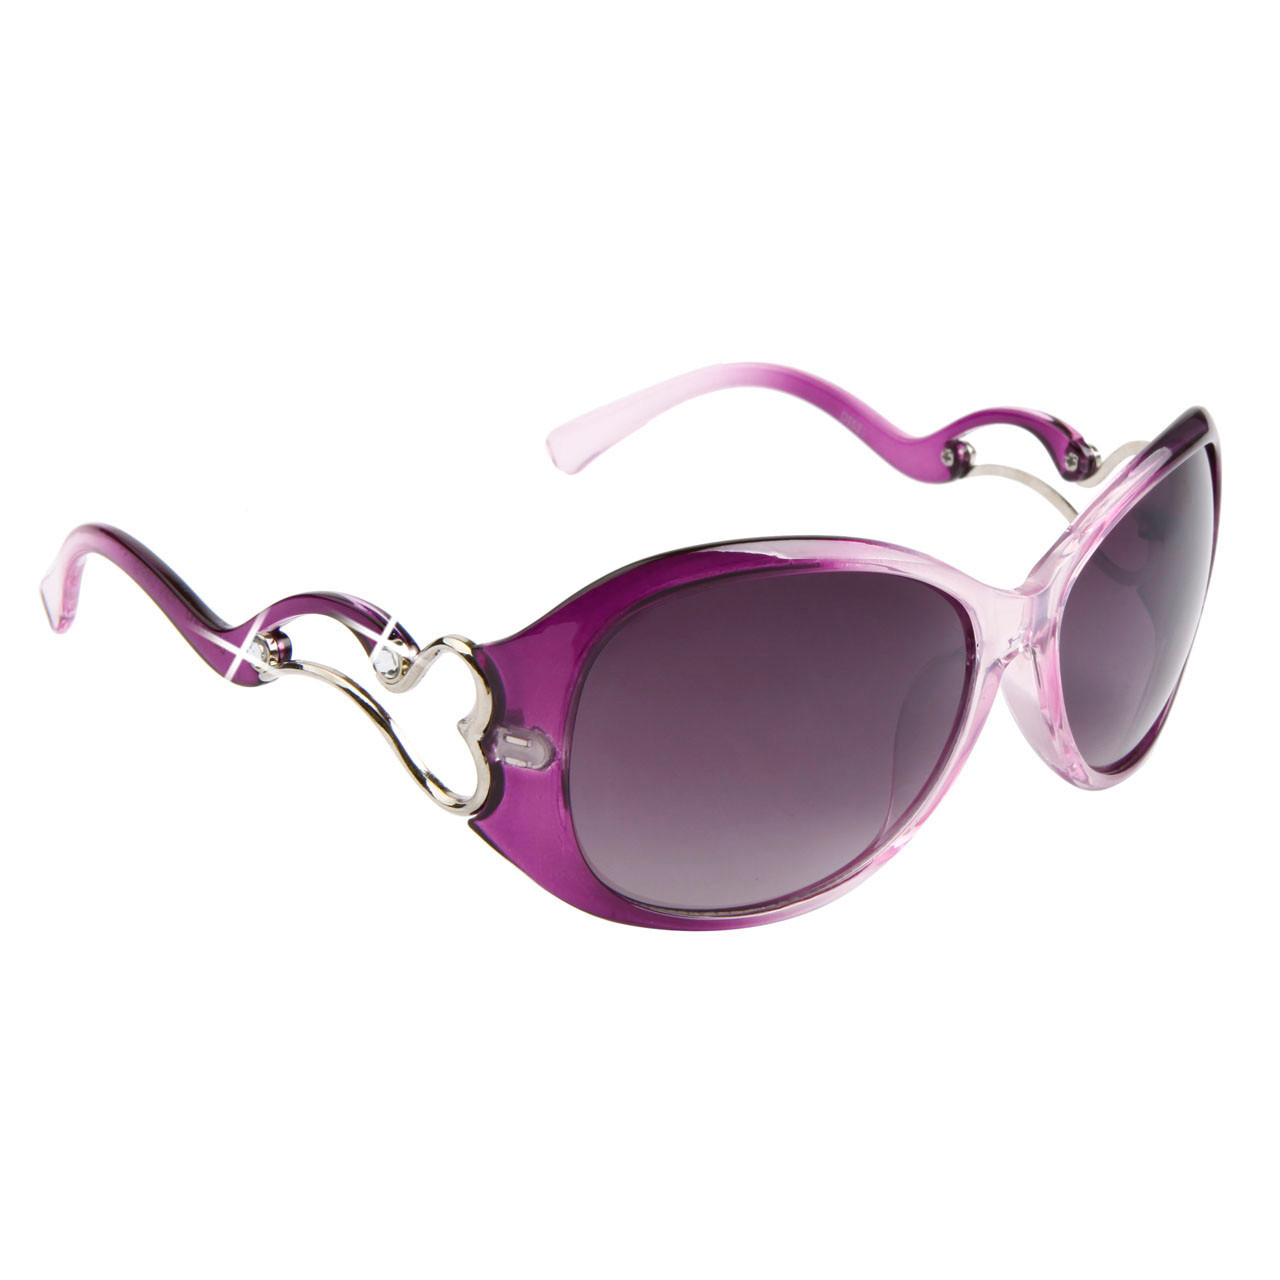 Diamond™ Eyewear Wholesale Sunglasses - Style # DI531